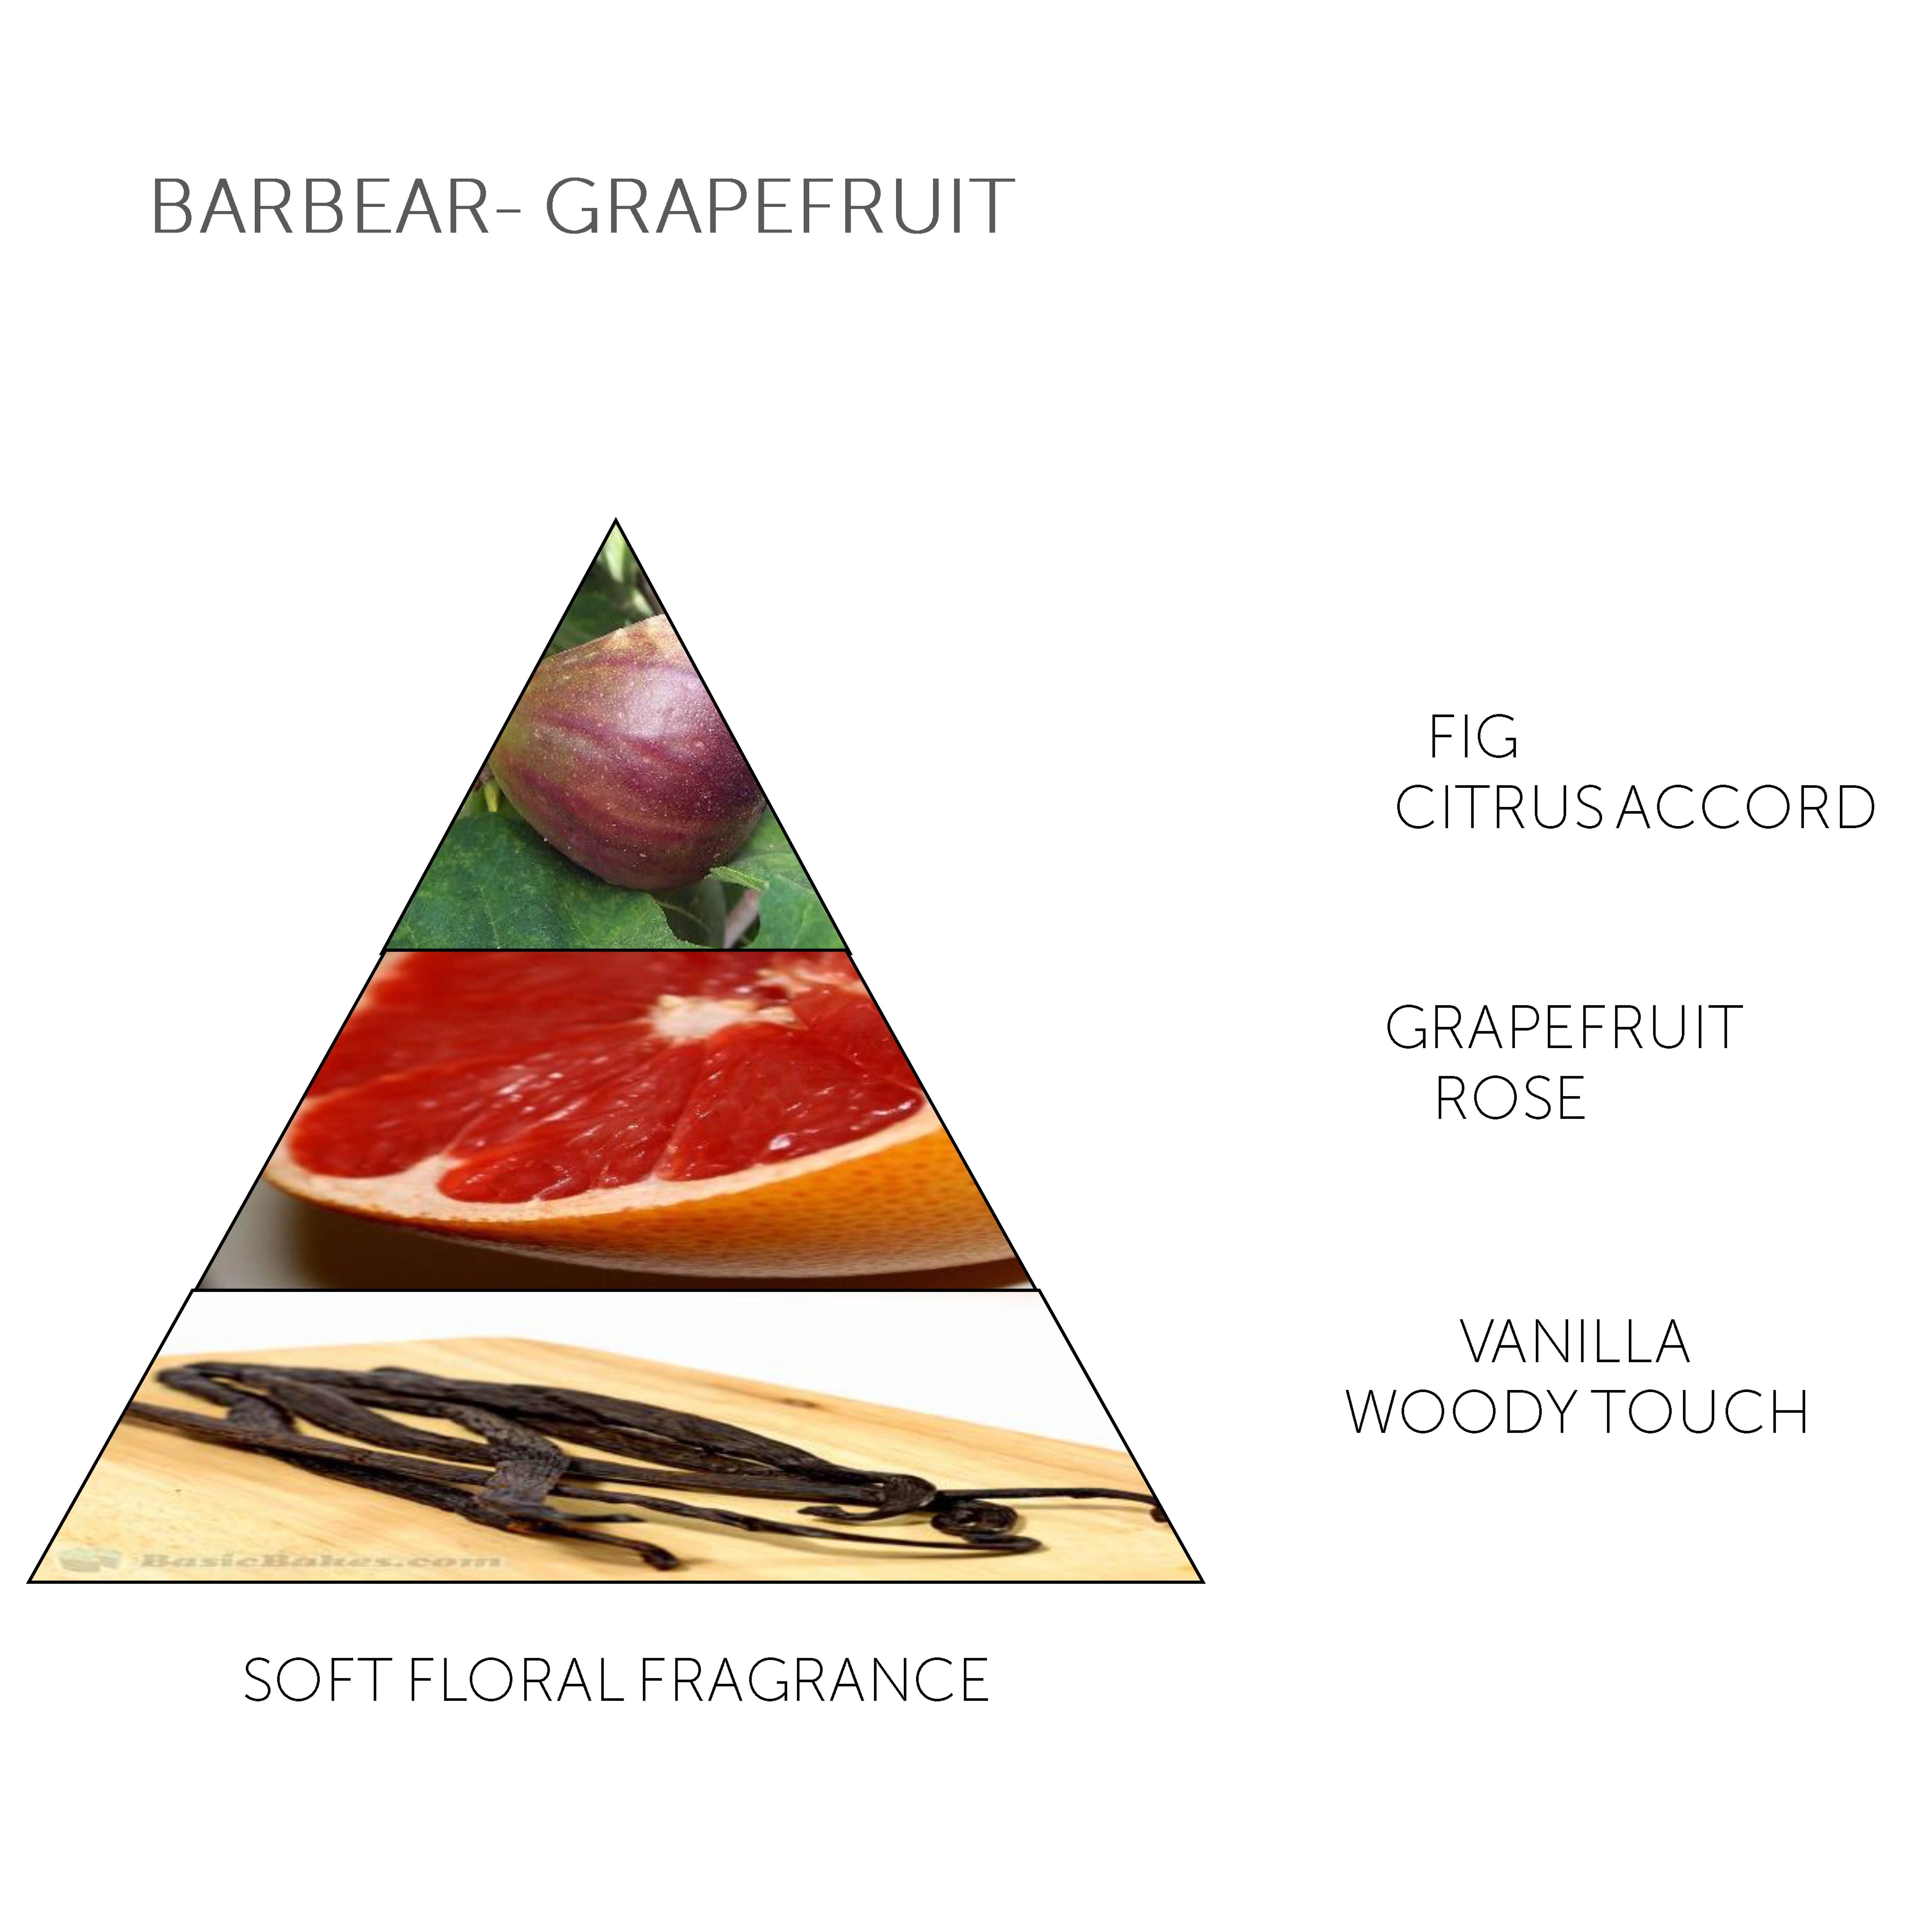 Soap Bar Barbear - Grapefruit Fig